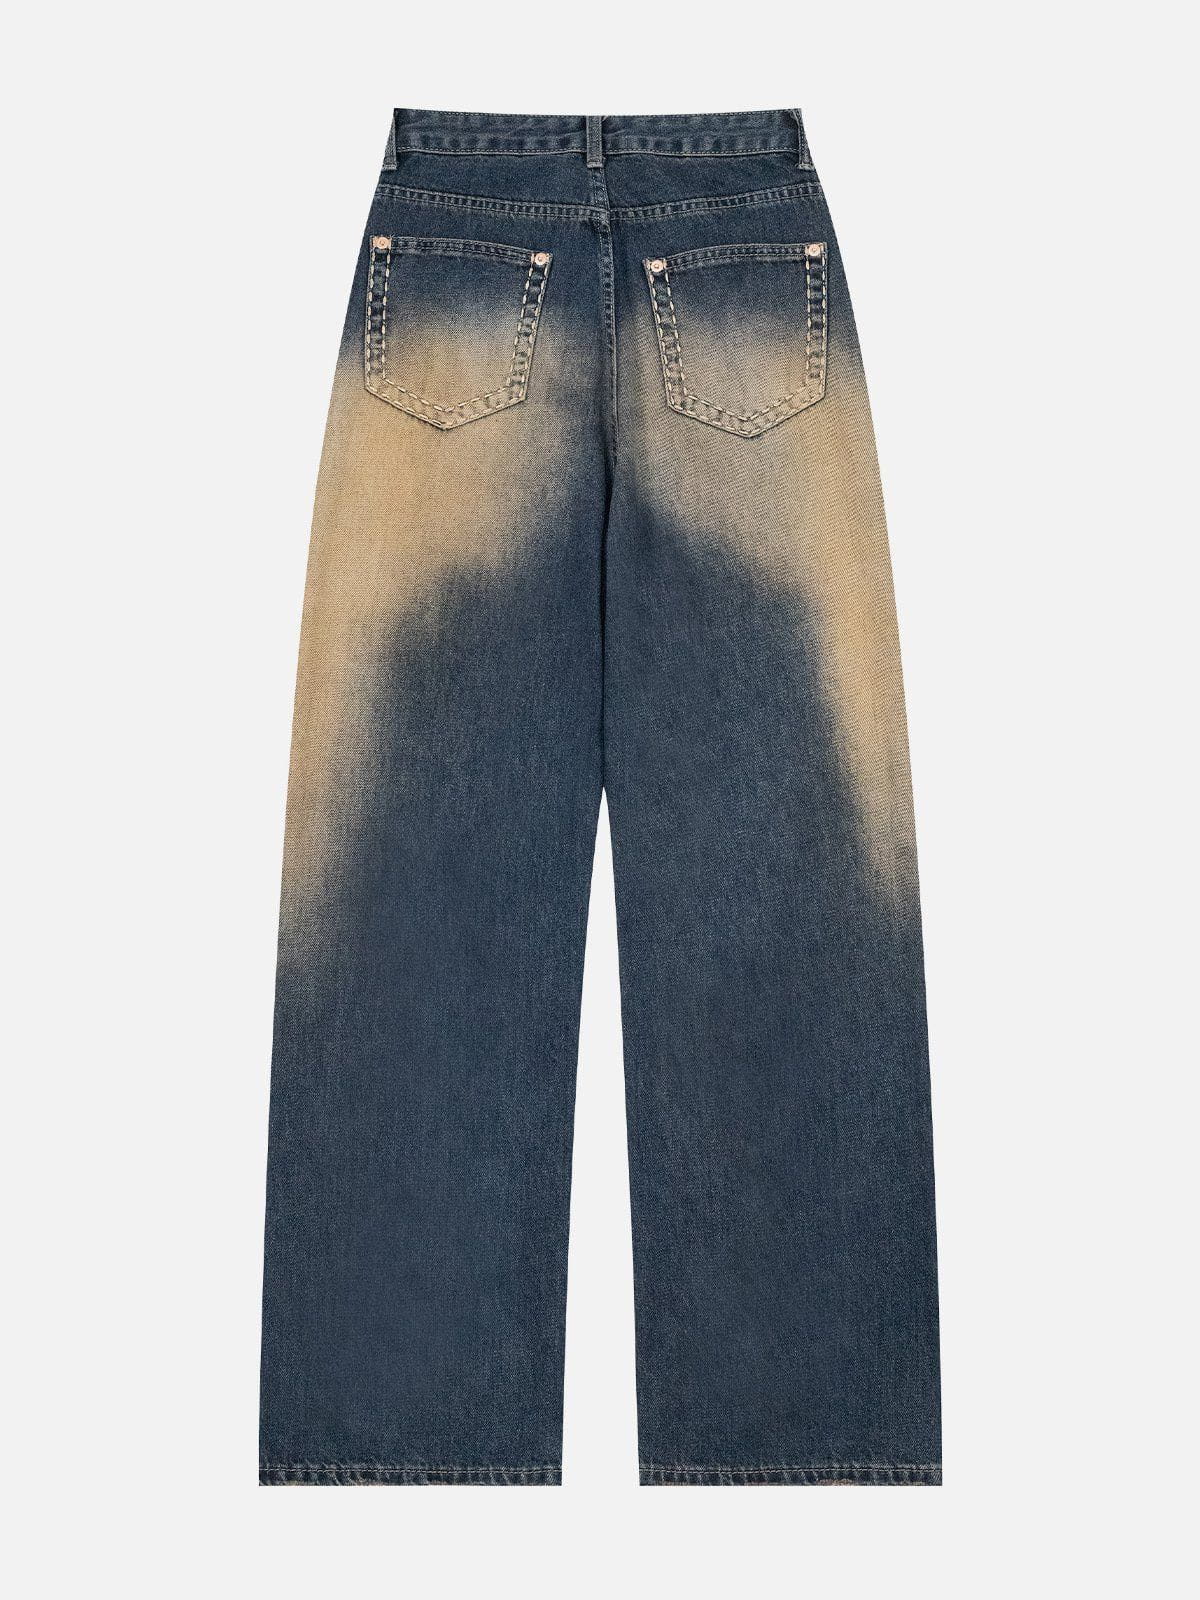 Majesda® - Vintage Washed Zipper Jeans outfit ideas streetwear fashion